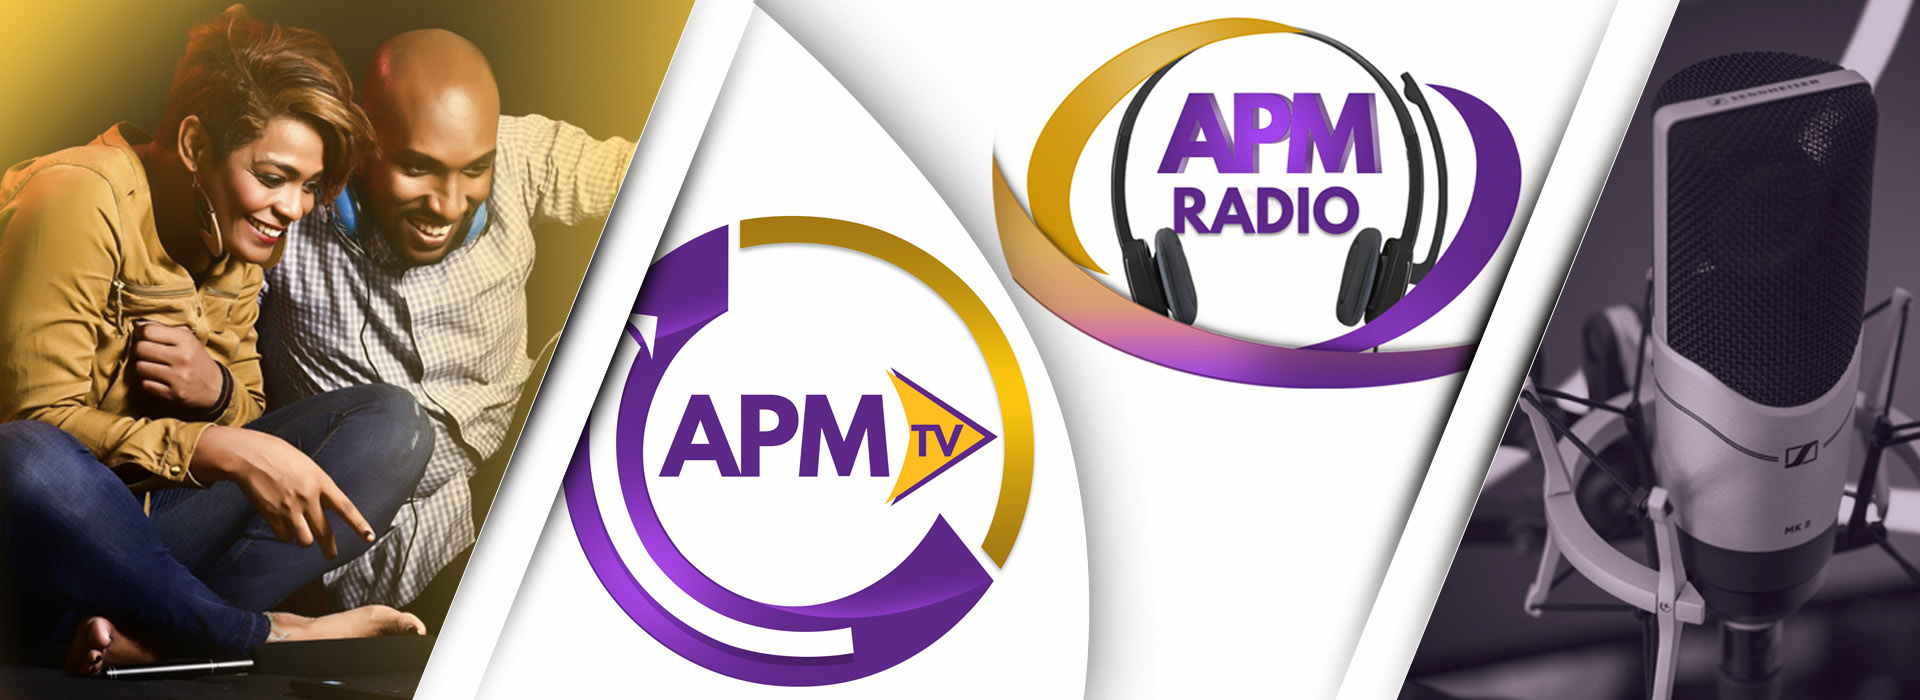 APM_Radio__TV